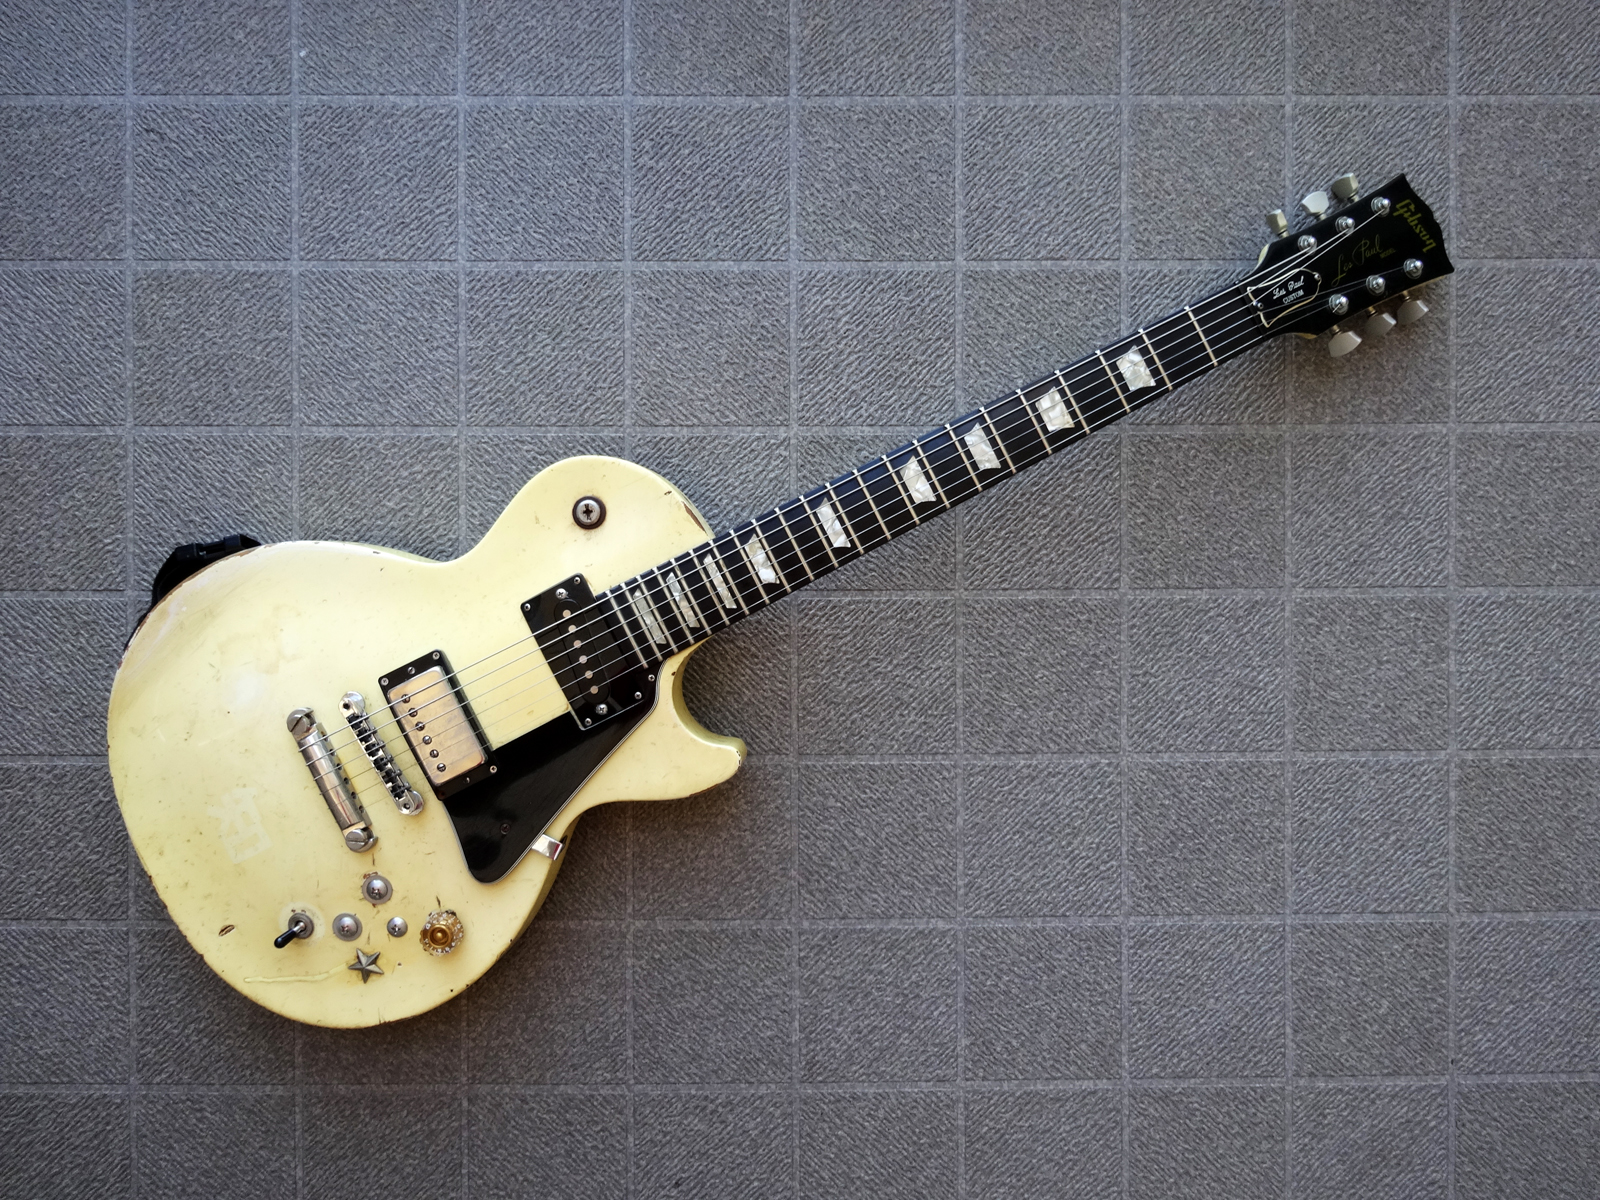 Gibson Les Paul studio エボニー-